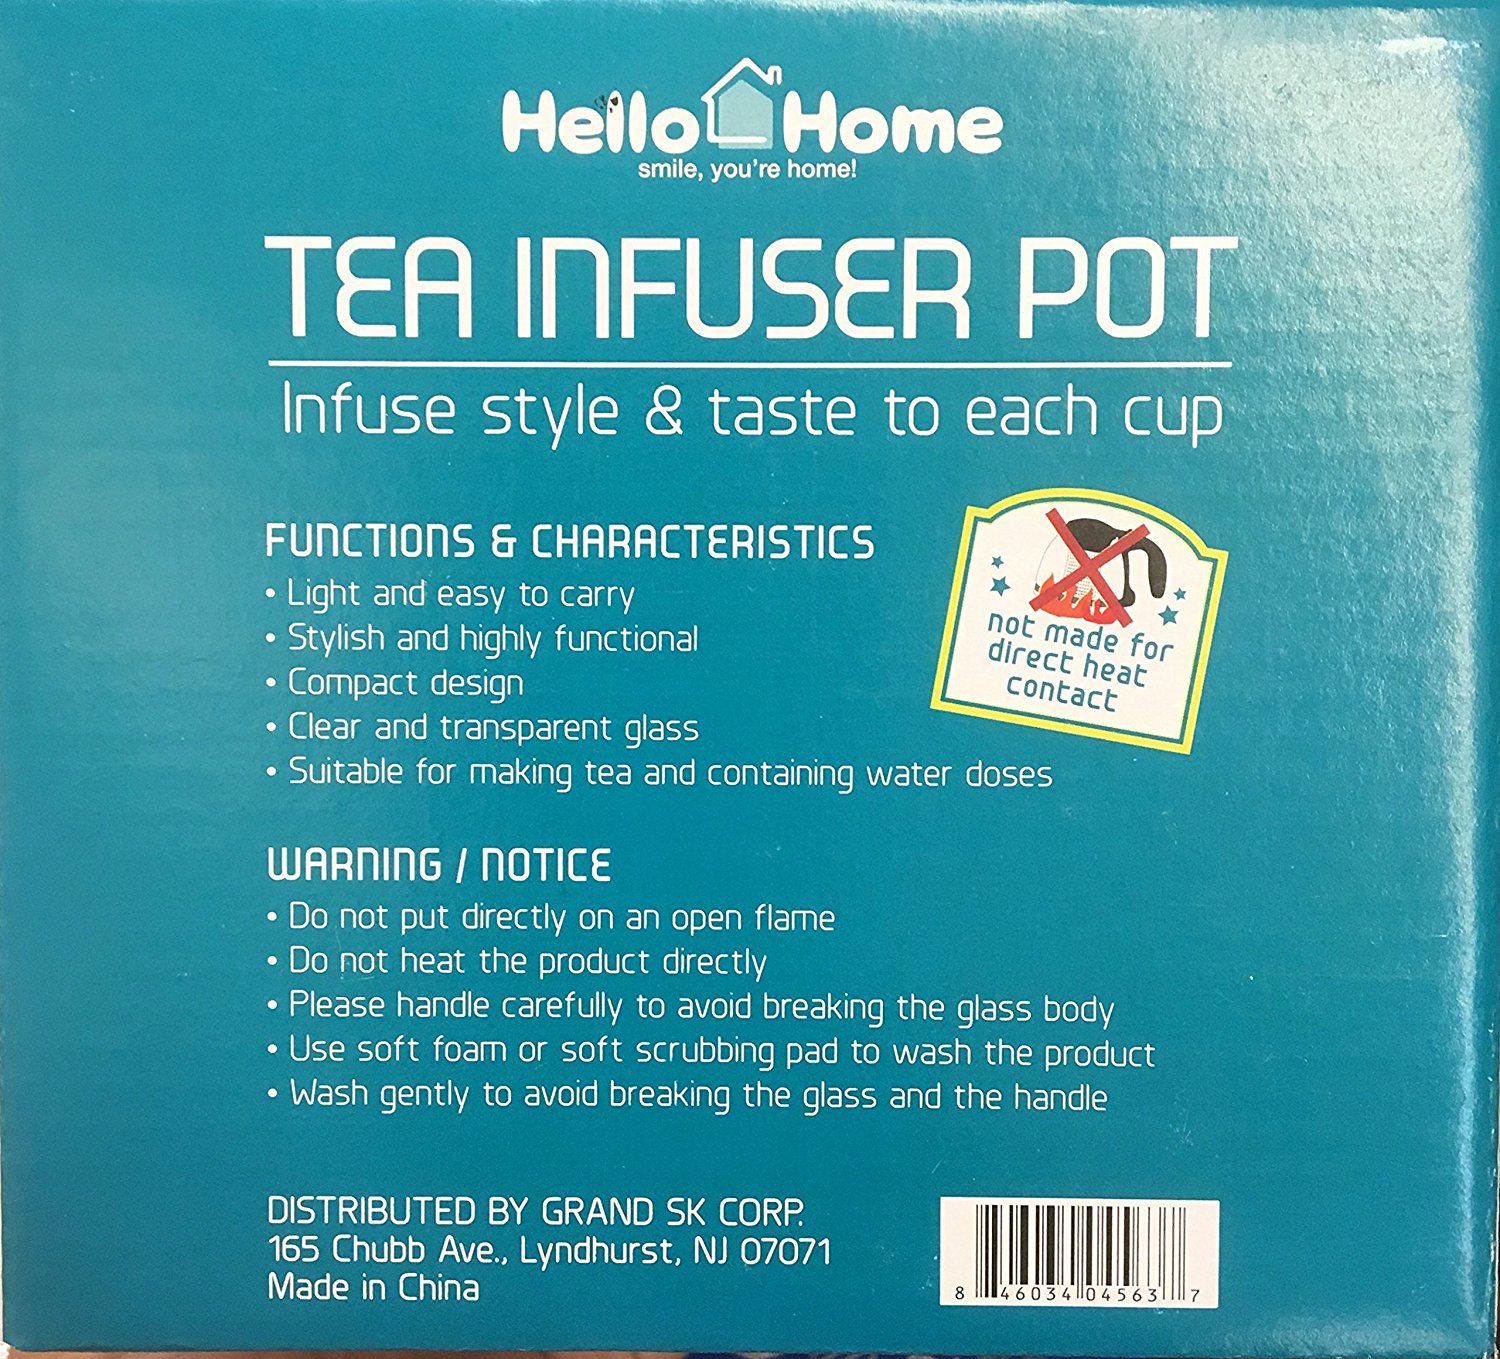 TEA INFUSER POT free image download